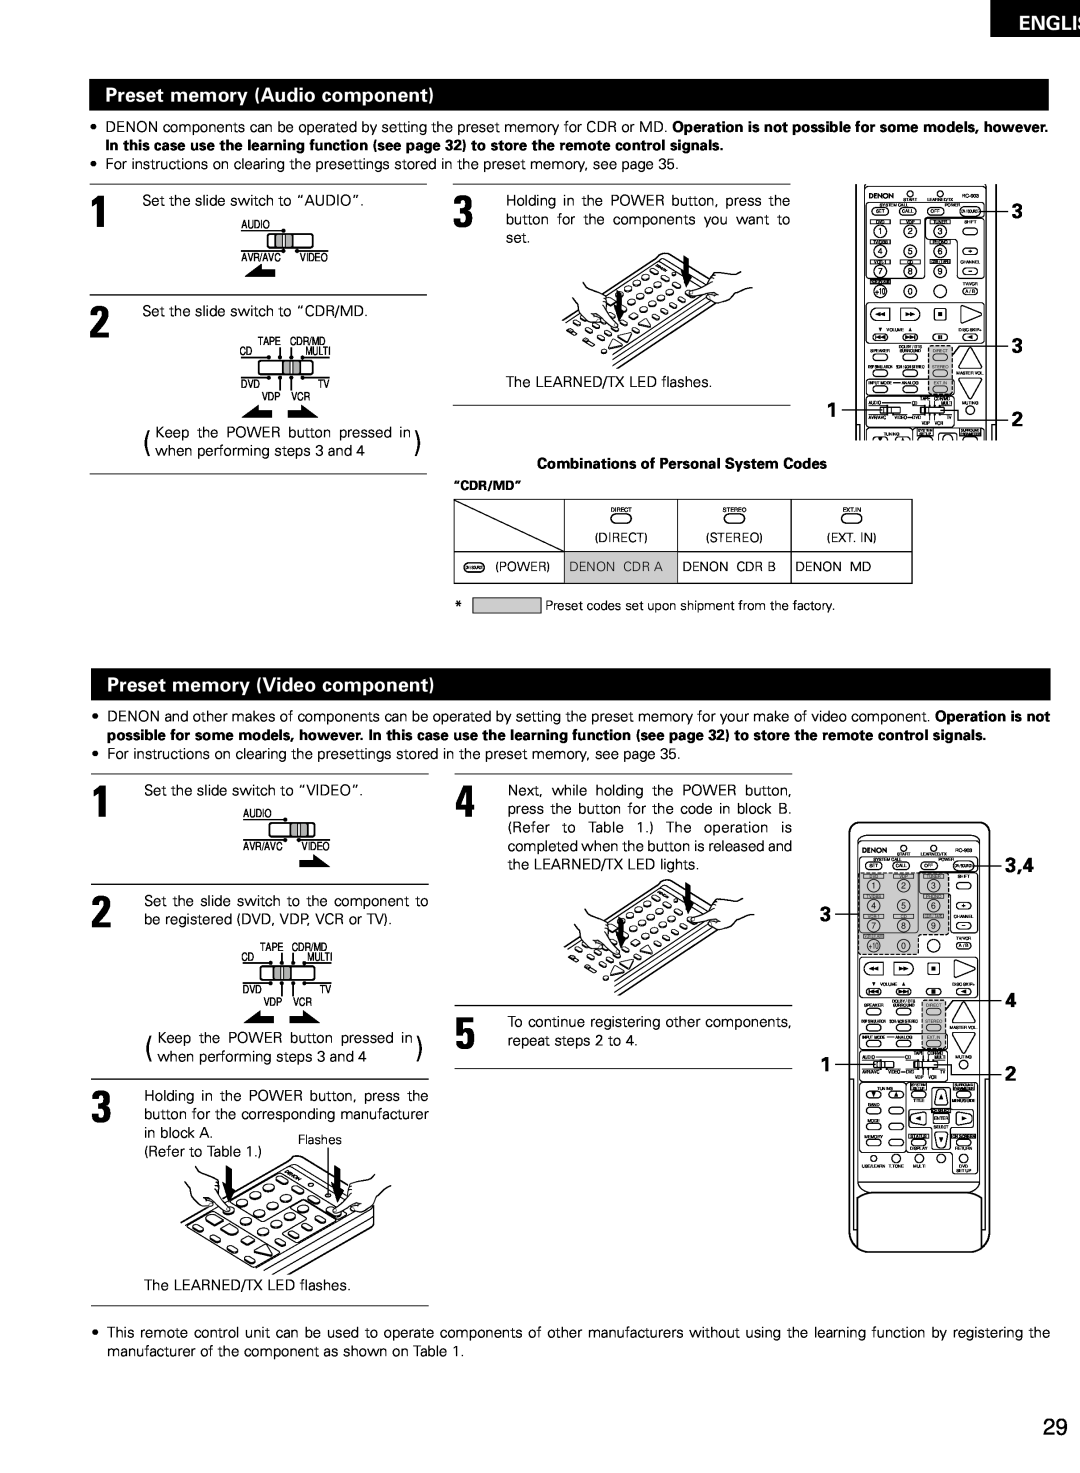 Denon AVR-2802/982 operating instructions ENGLIS Preset memory Audio component, Preset memory Video component 